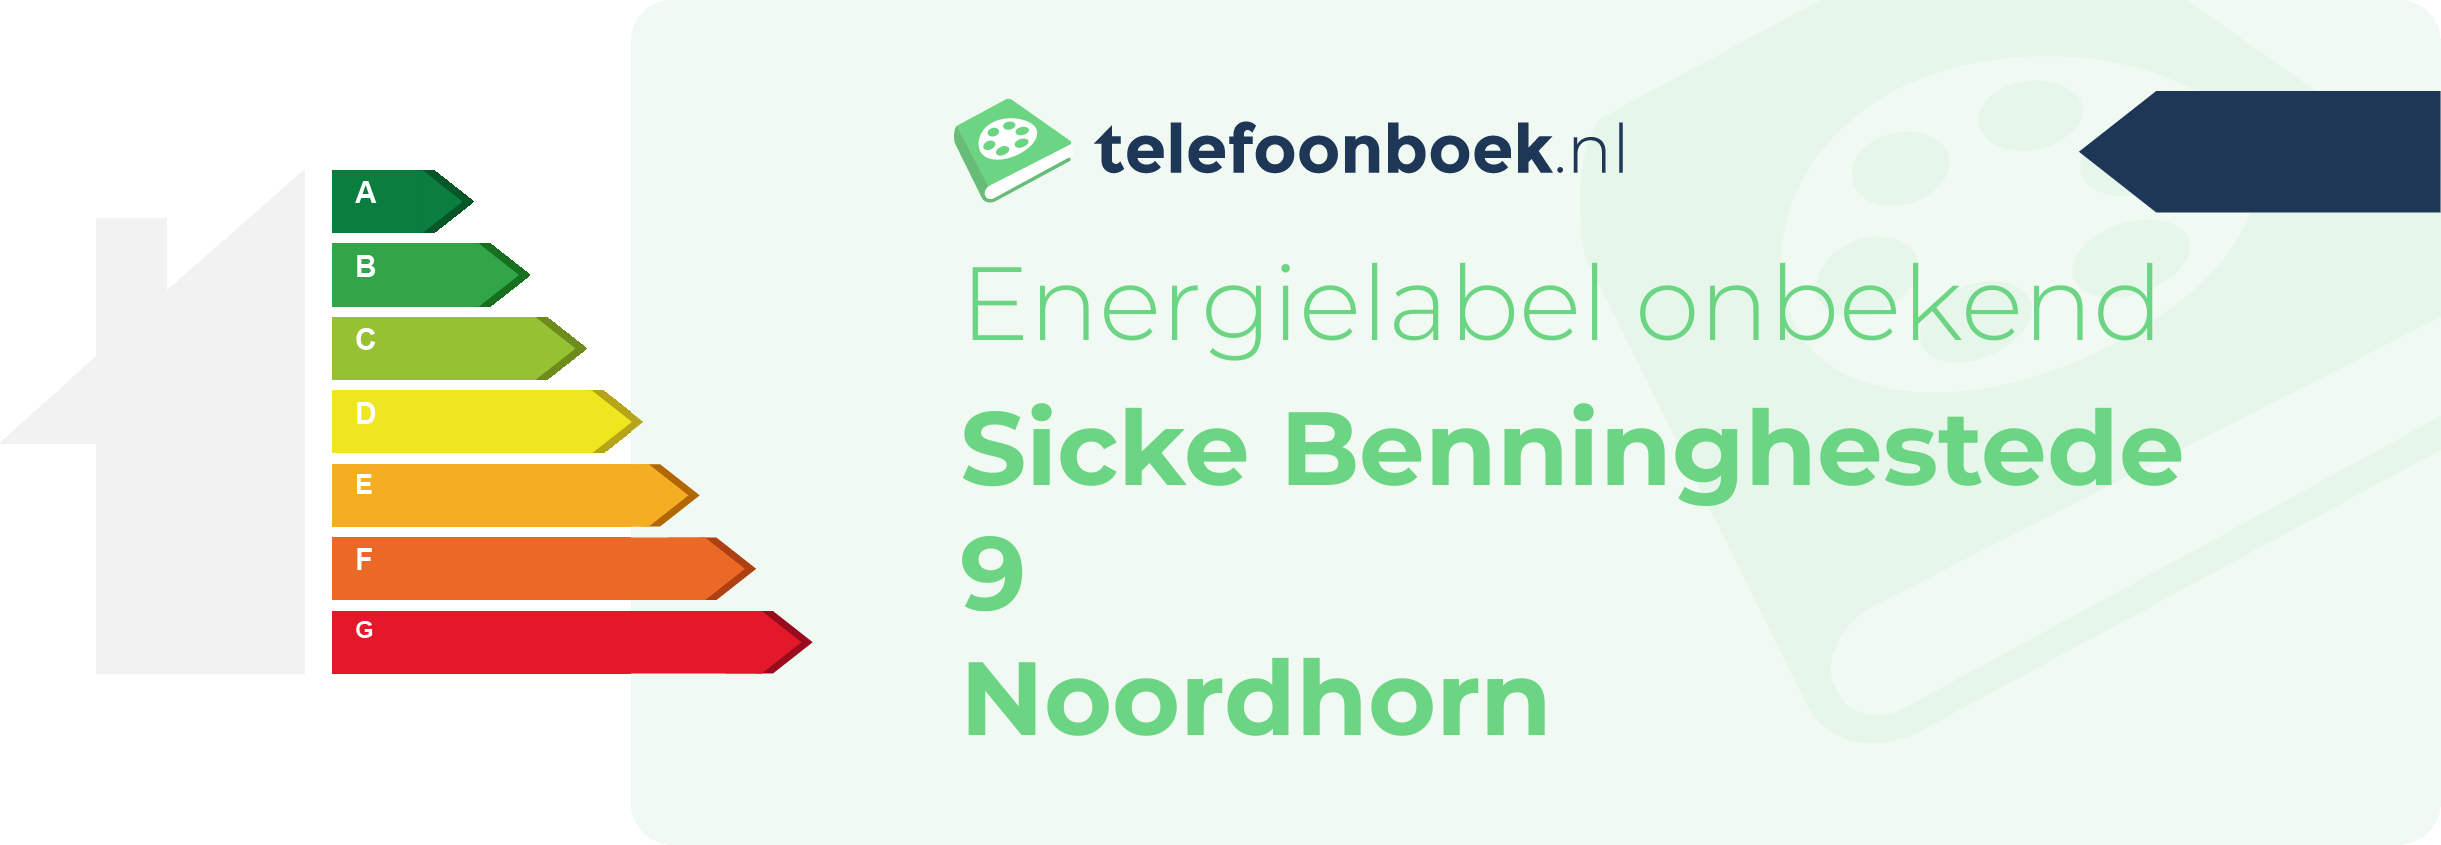 Energielabel Sicke Benninghestede 9 Noordhorn